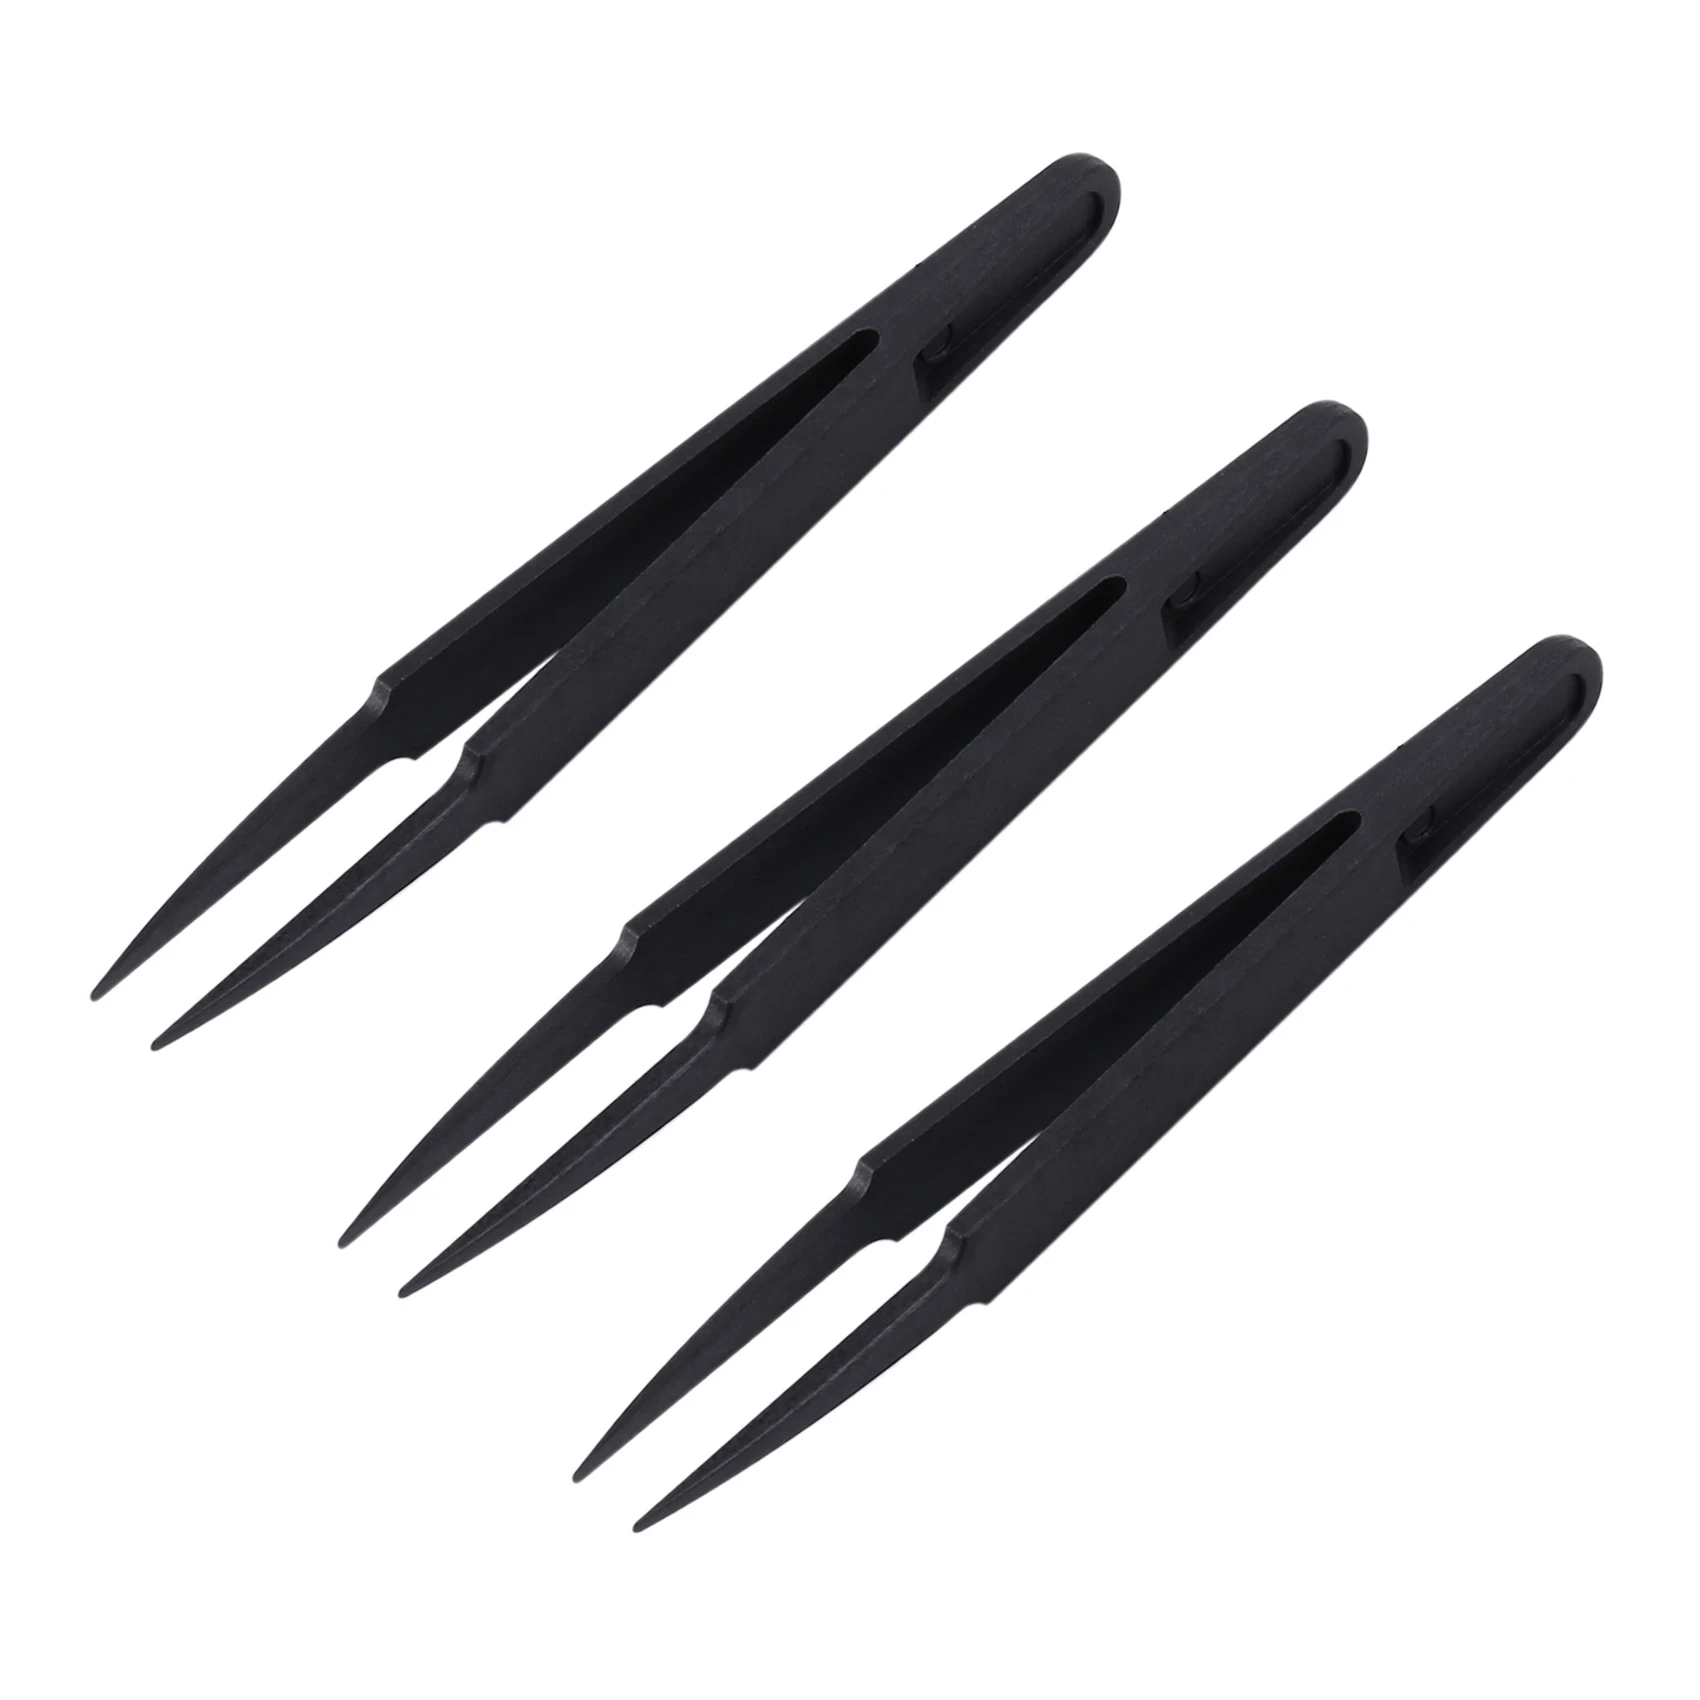 

3 Pcs Black Plastic Electronic Pointy Tip Anti-static Tweezers